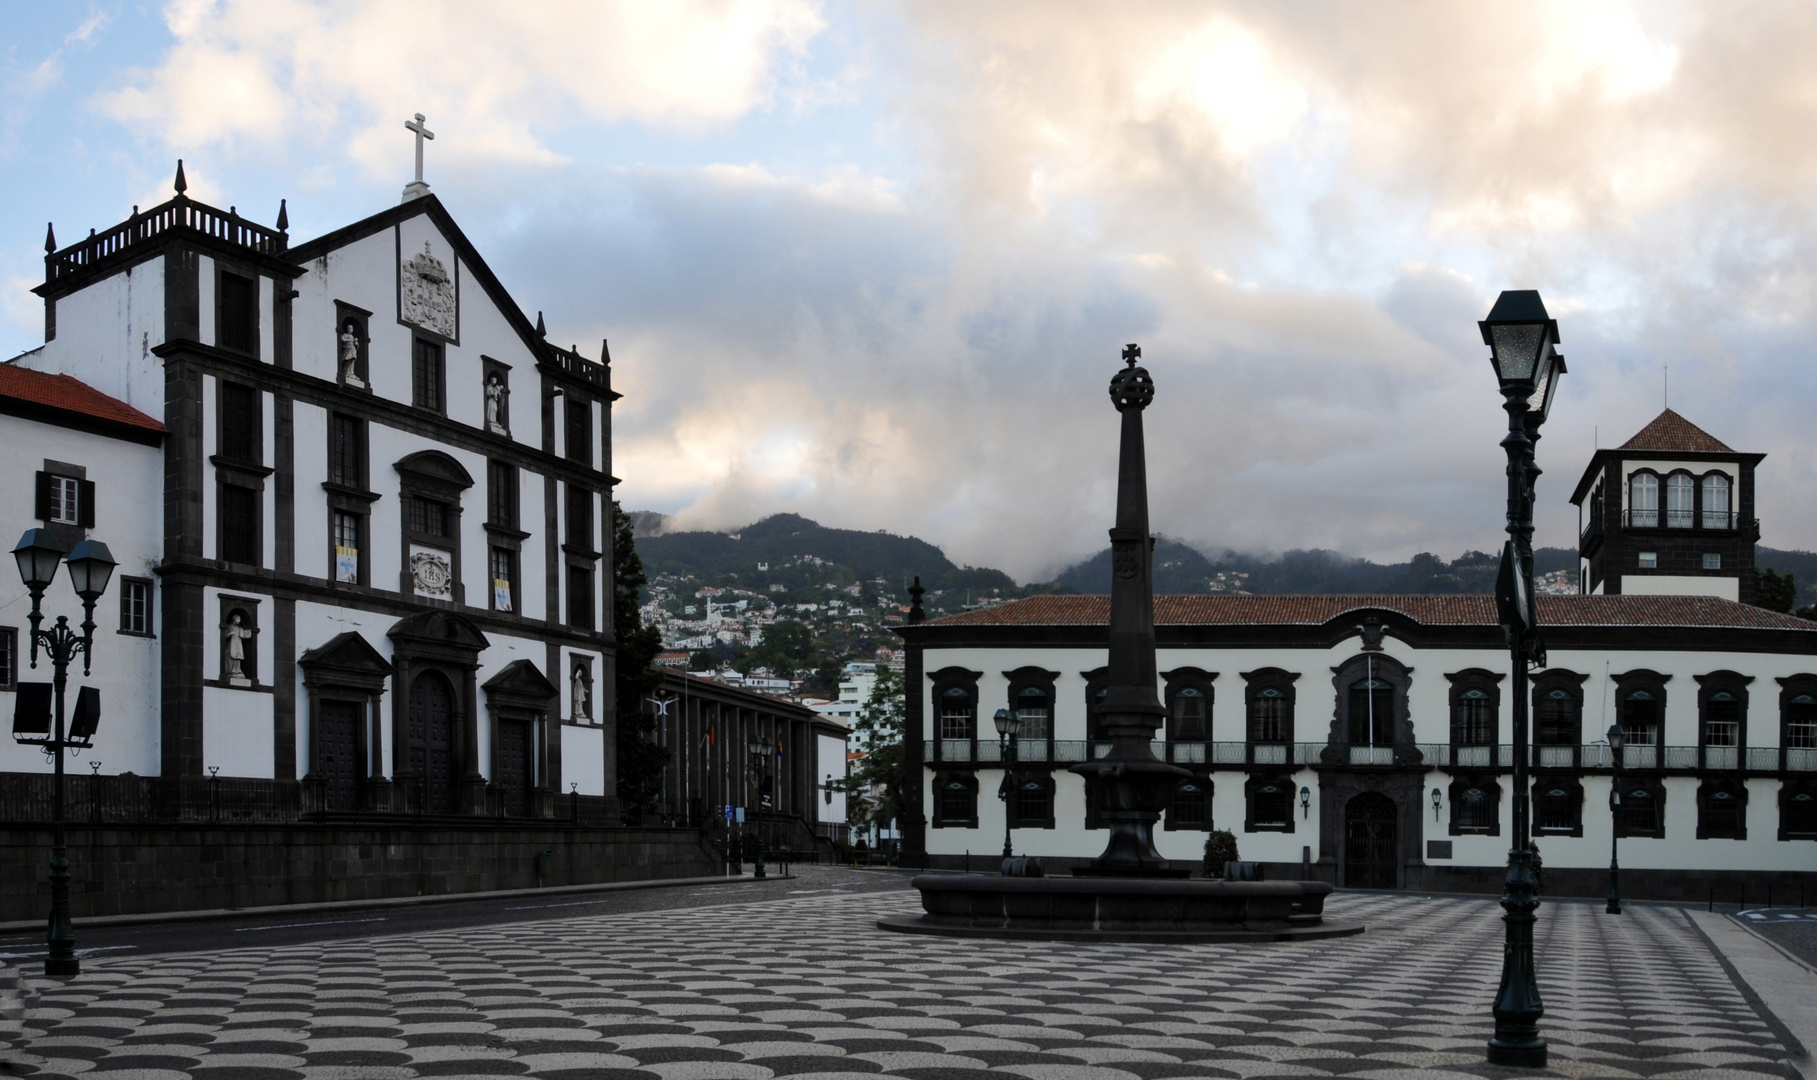 Praca do Muncipio in Funchal